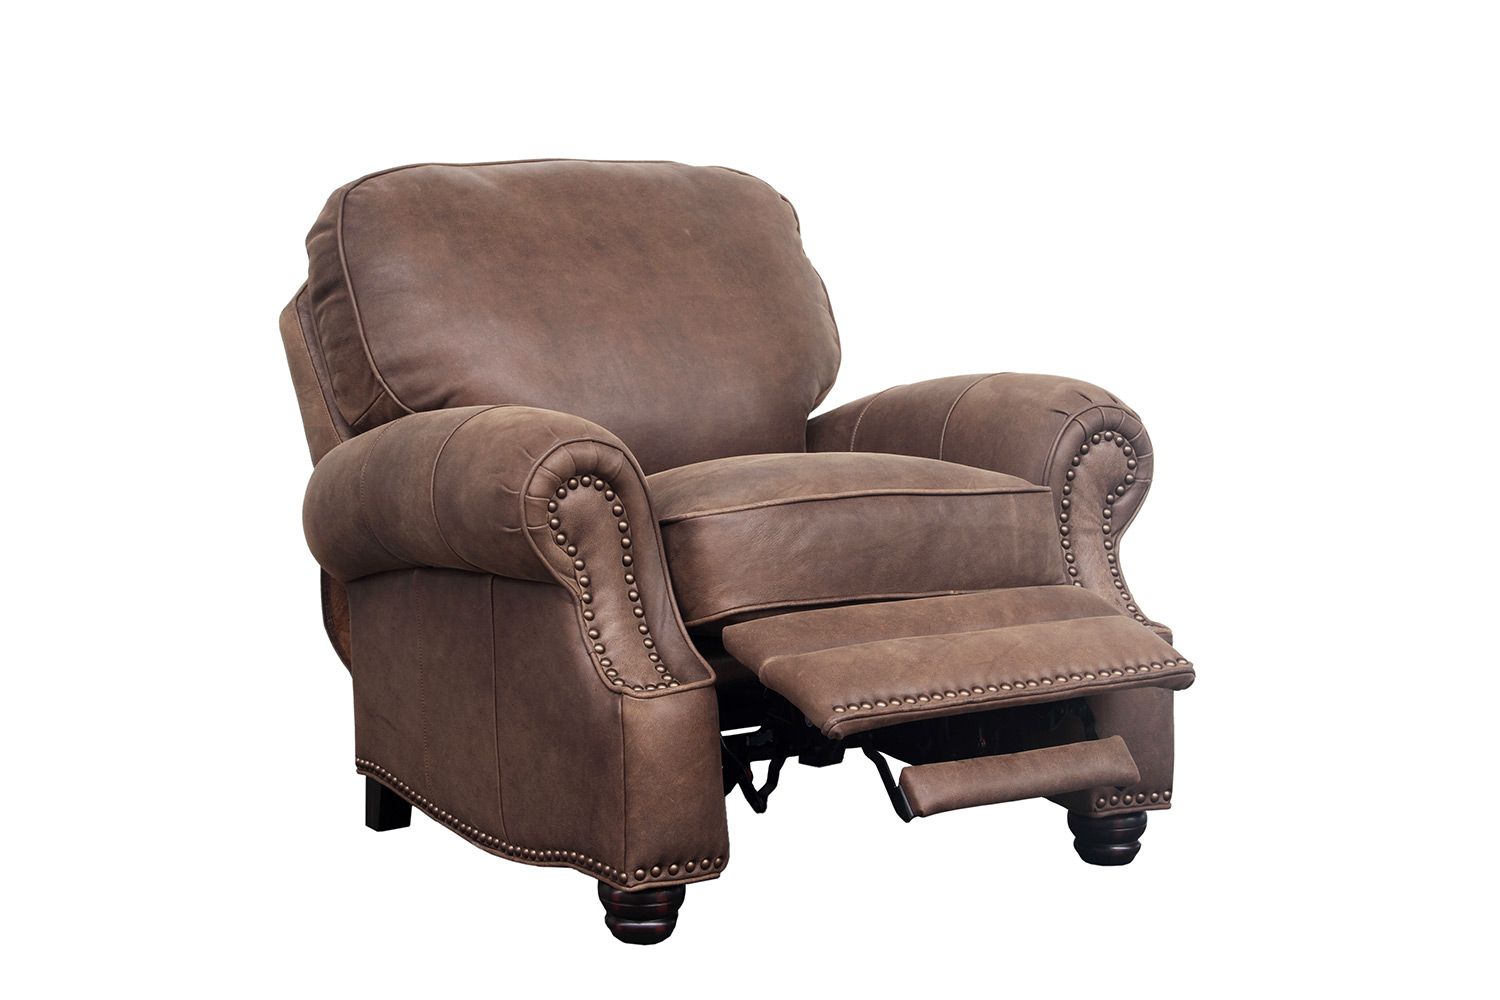 Barcalounger Longhorn Recliner Chair - Sanded Dark Bomber/Top Grain Leather